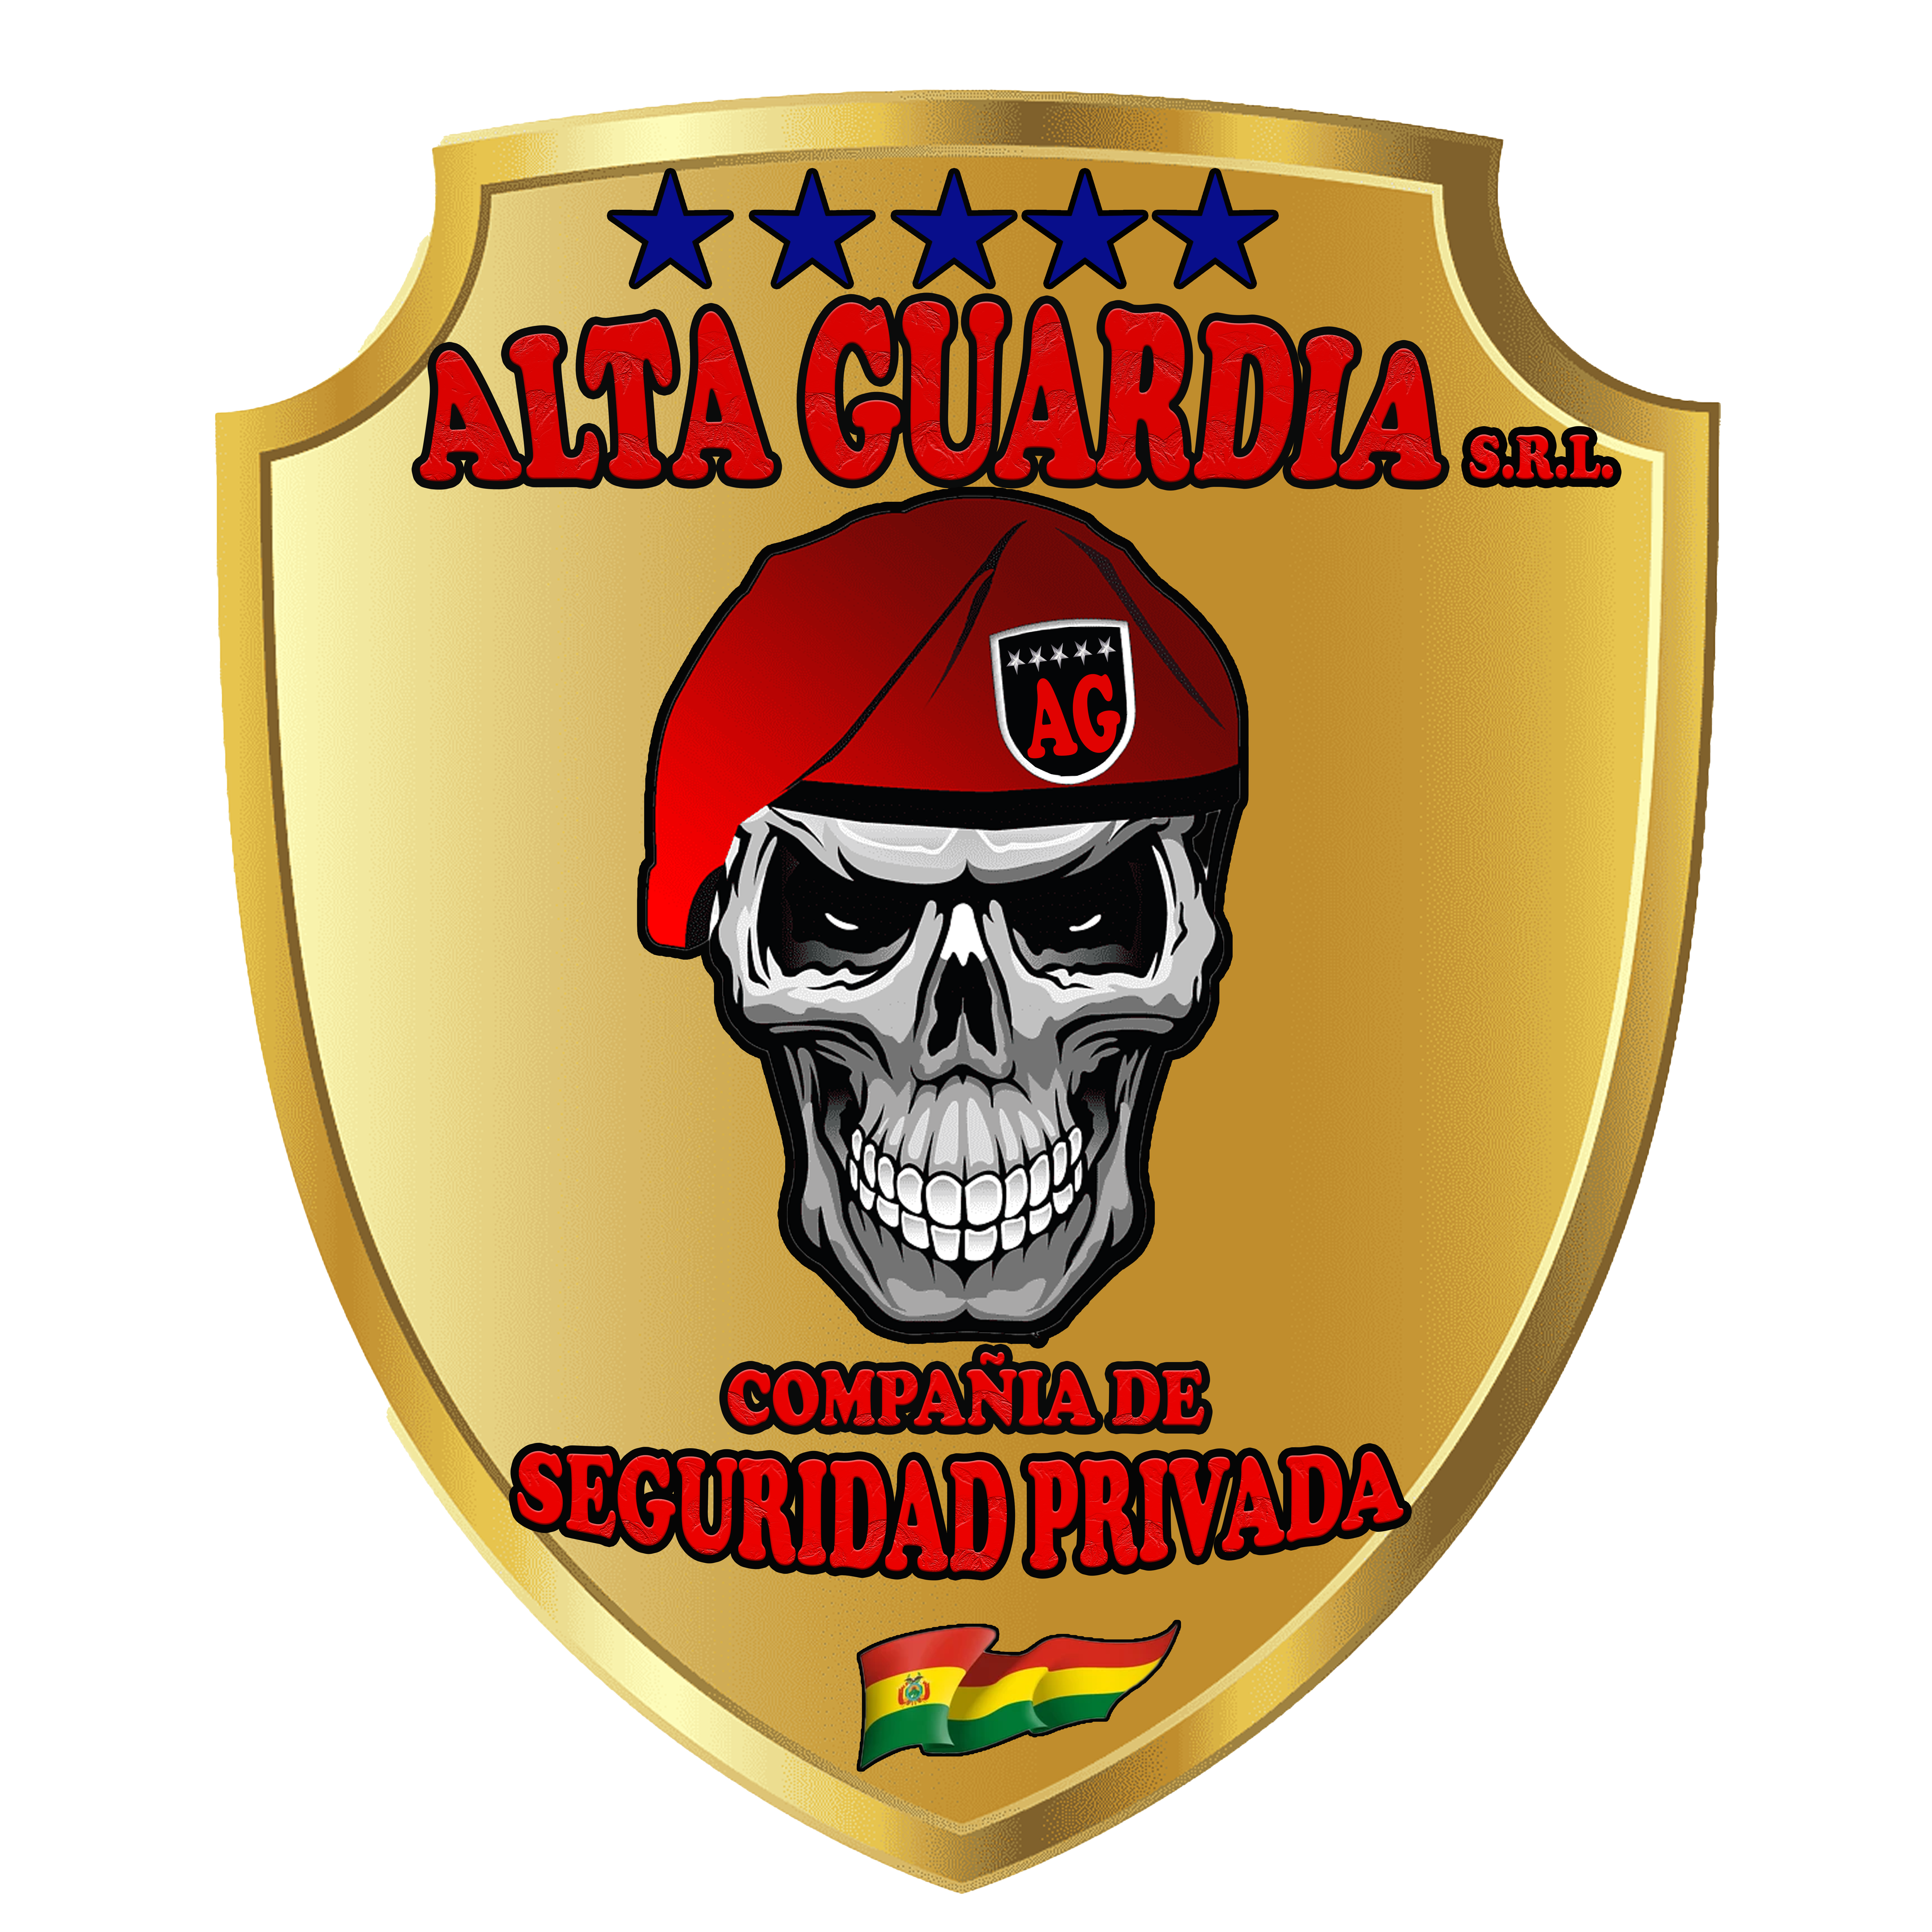 ALTA GUARDIA S.R.L. COMPAÑIA DE SEGURIDAD PRIVADA